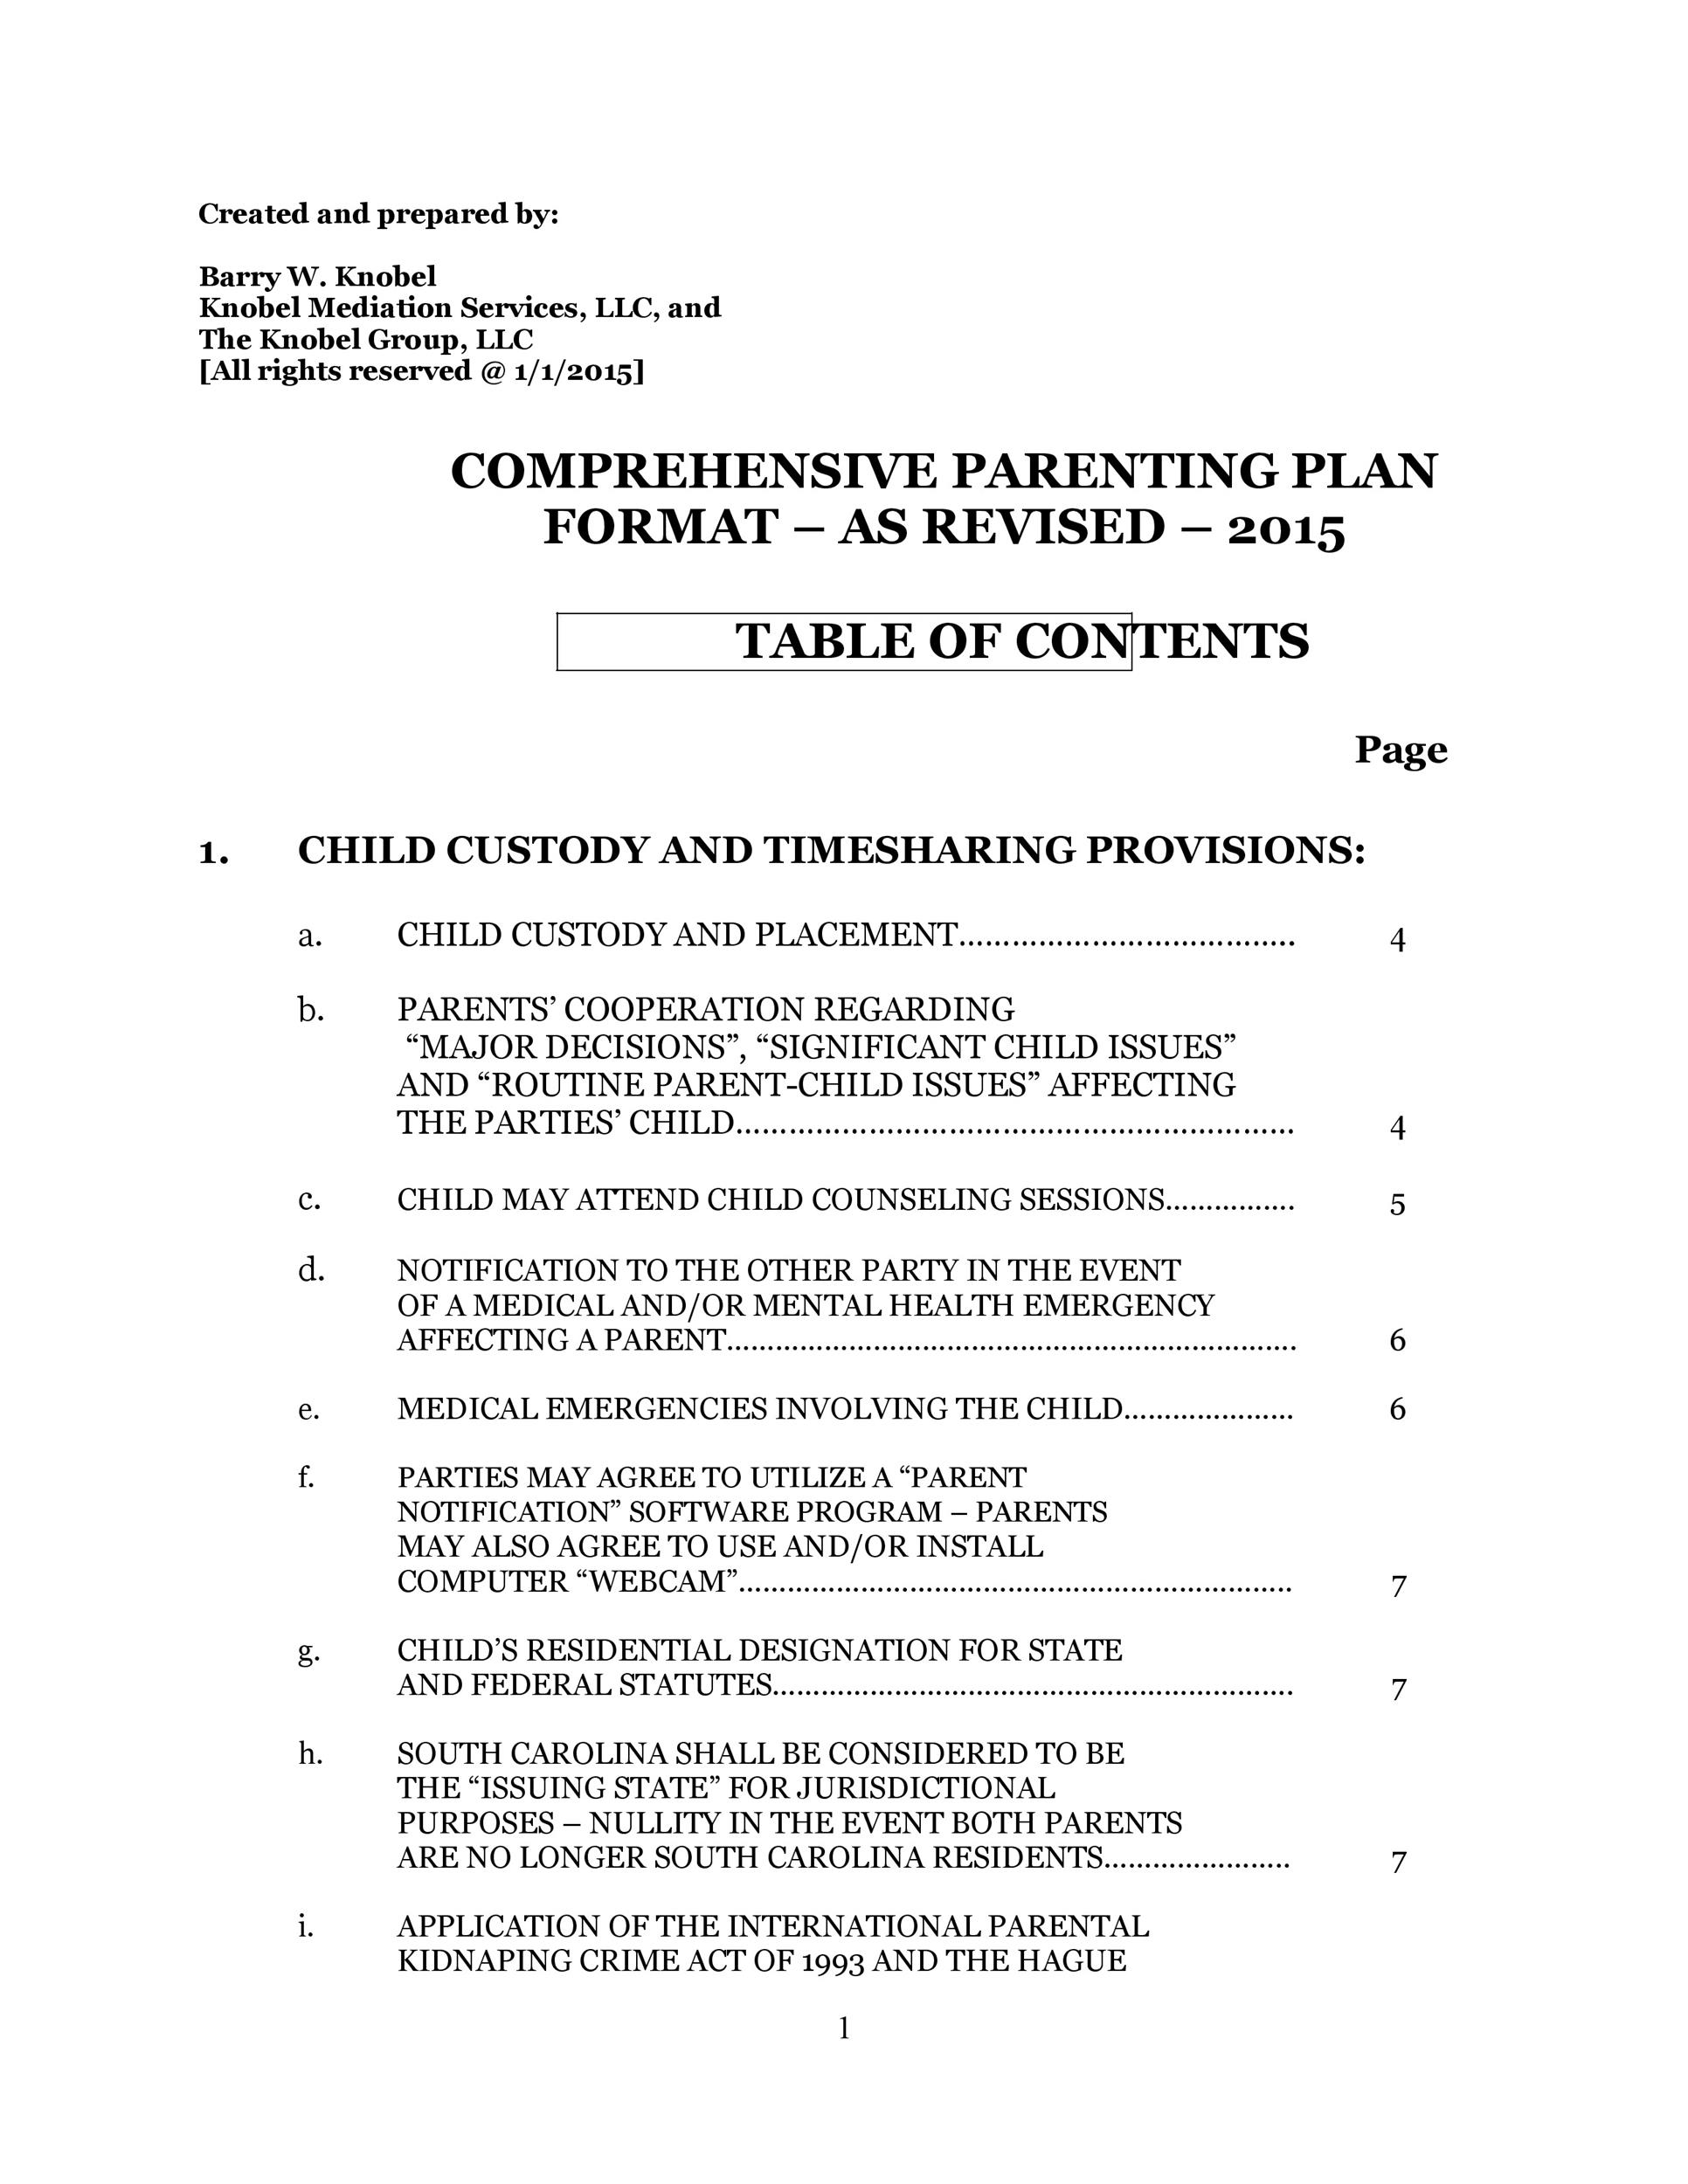 49 FREE Parenting Plan & Custody Agreement Templates ᐅ TemplateLab